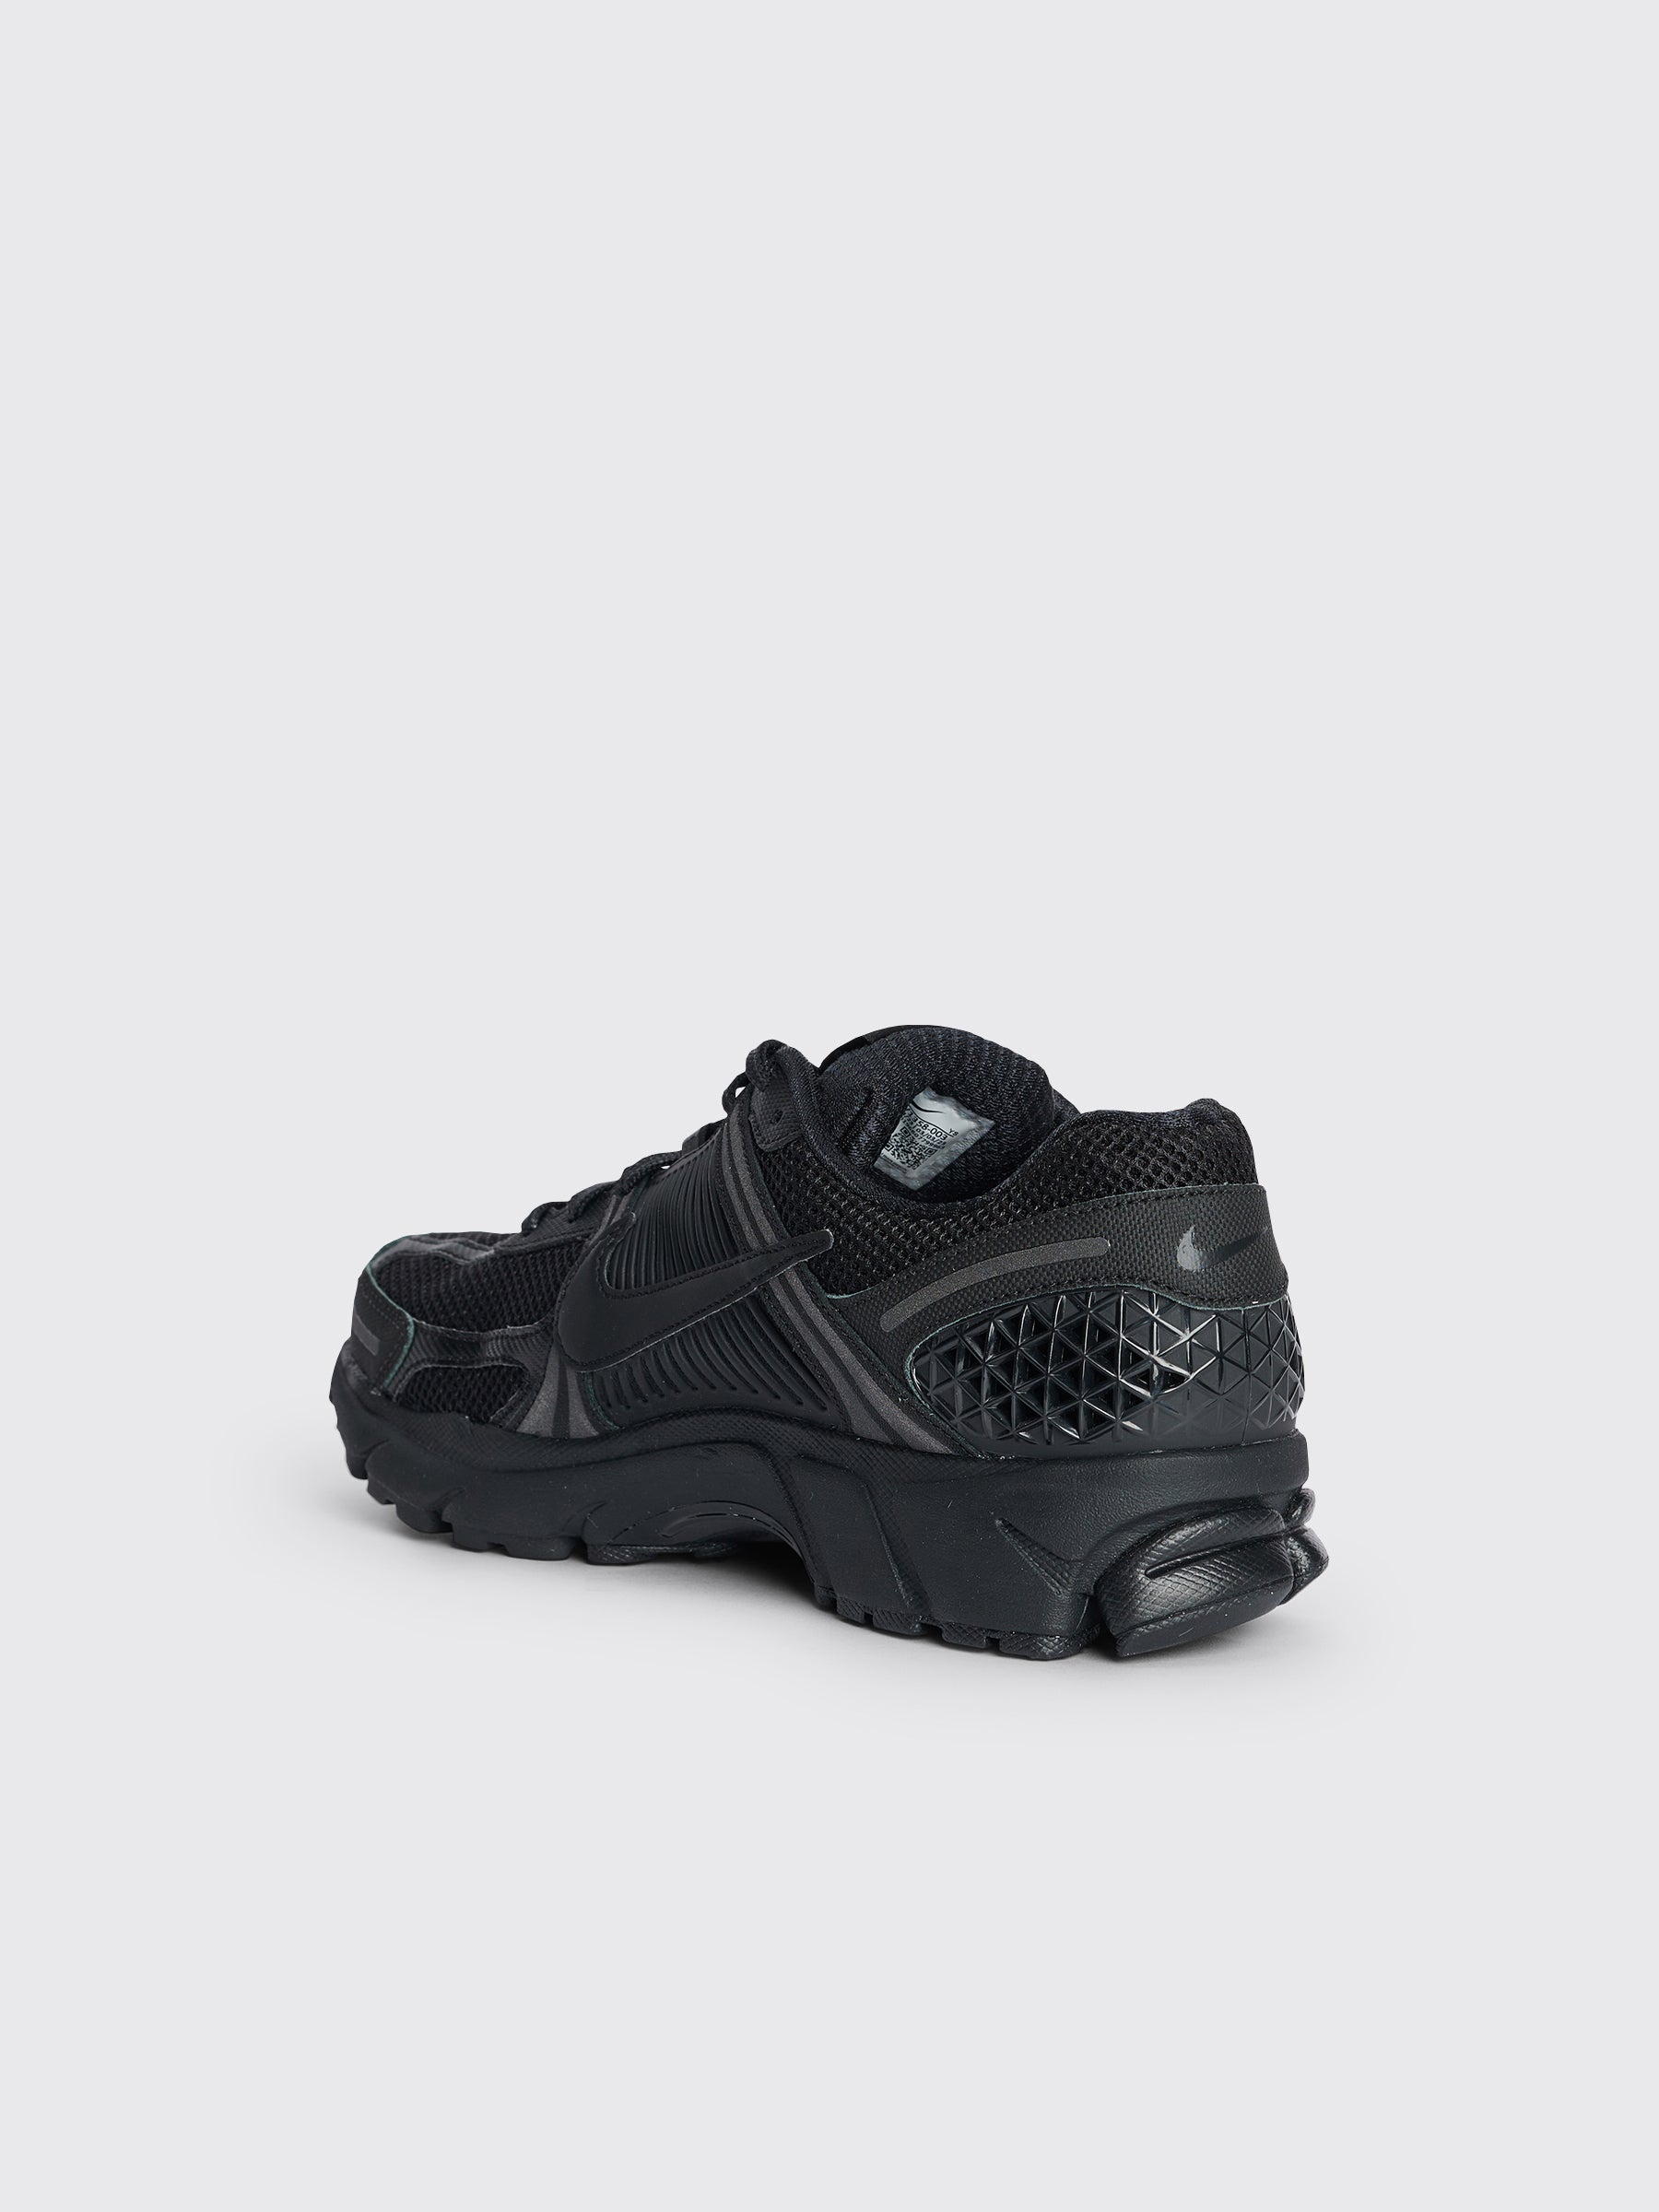 Nike Zoom Vomero 5 SP Black